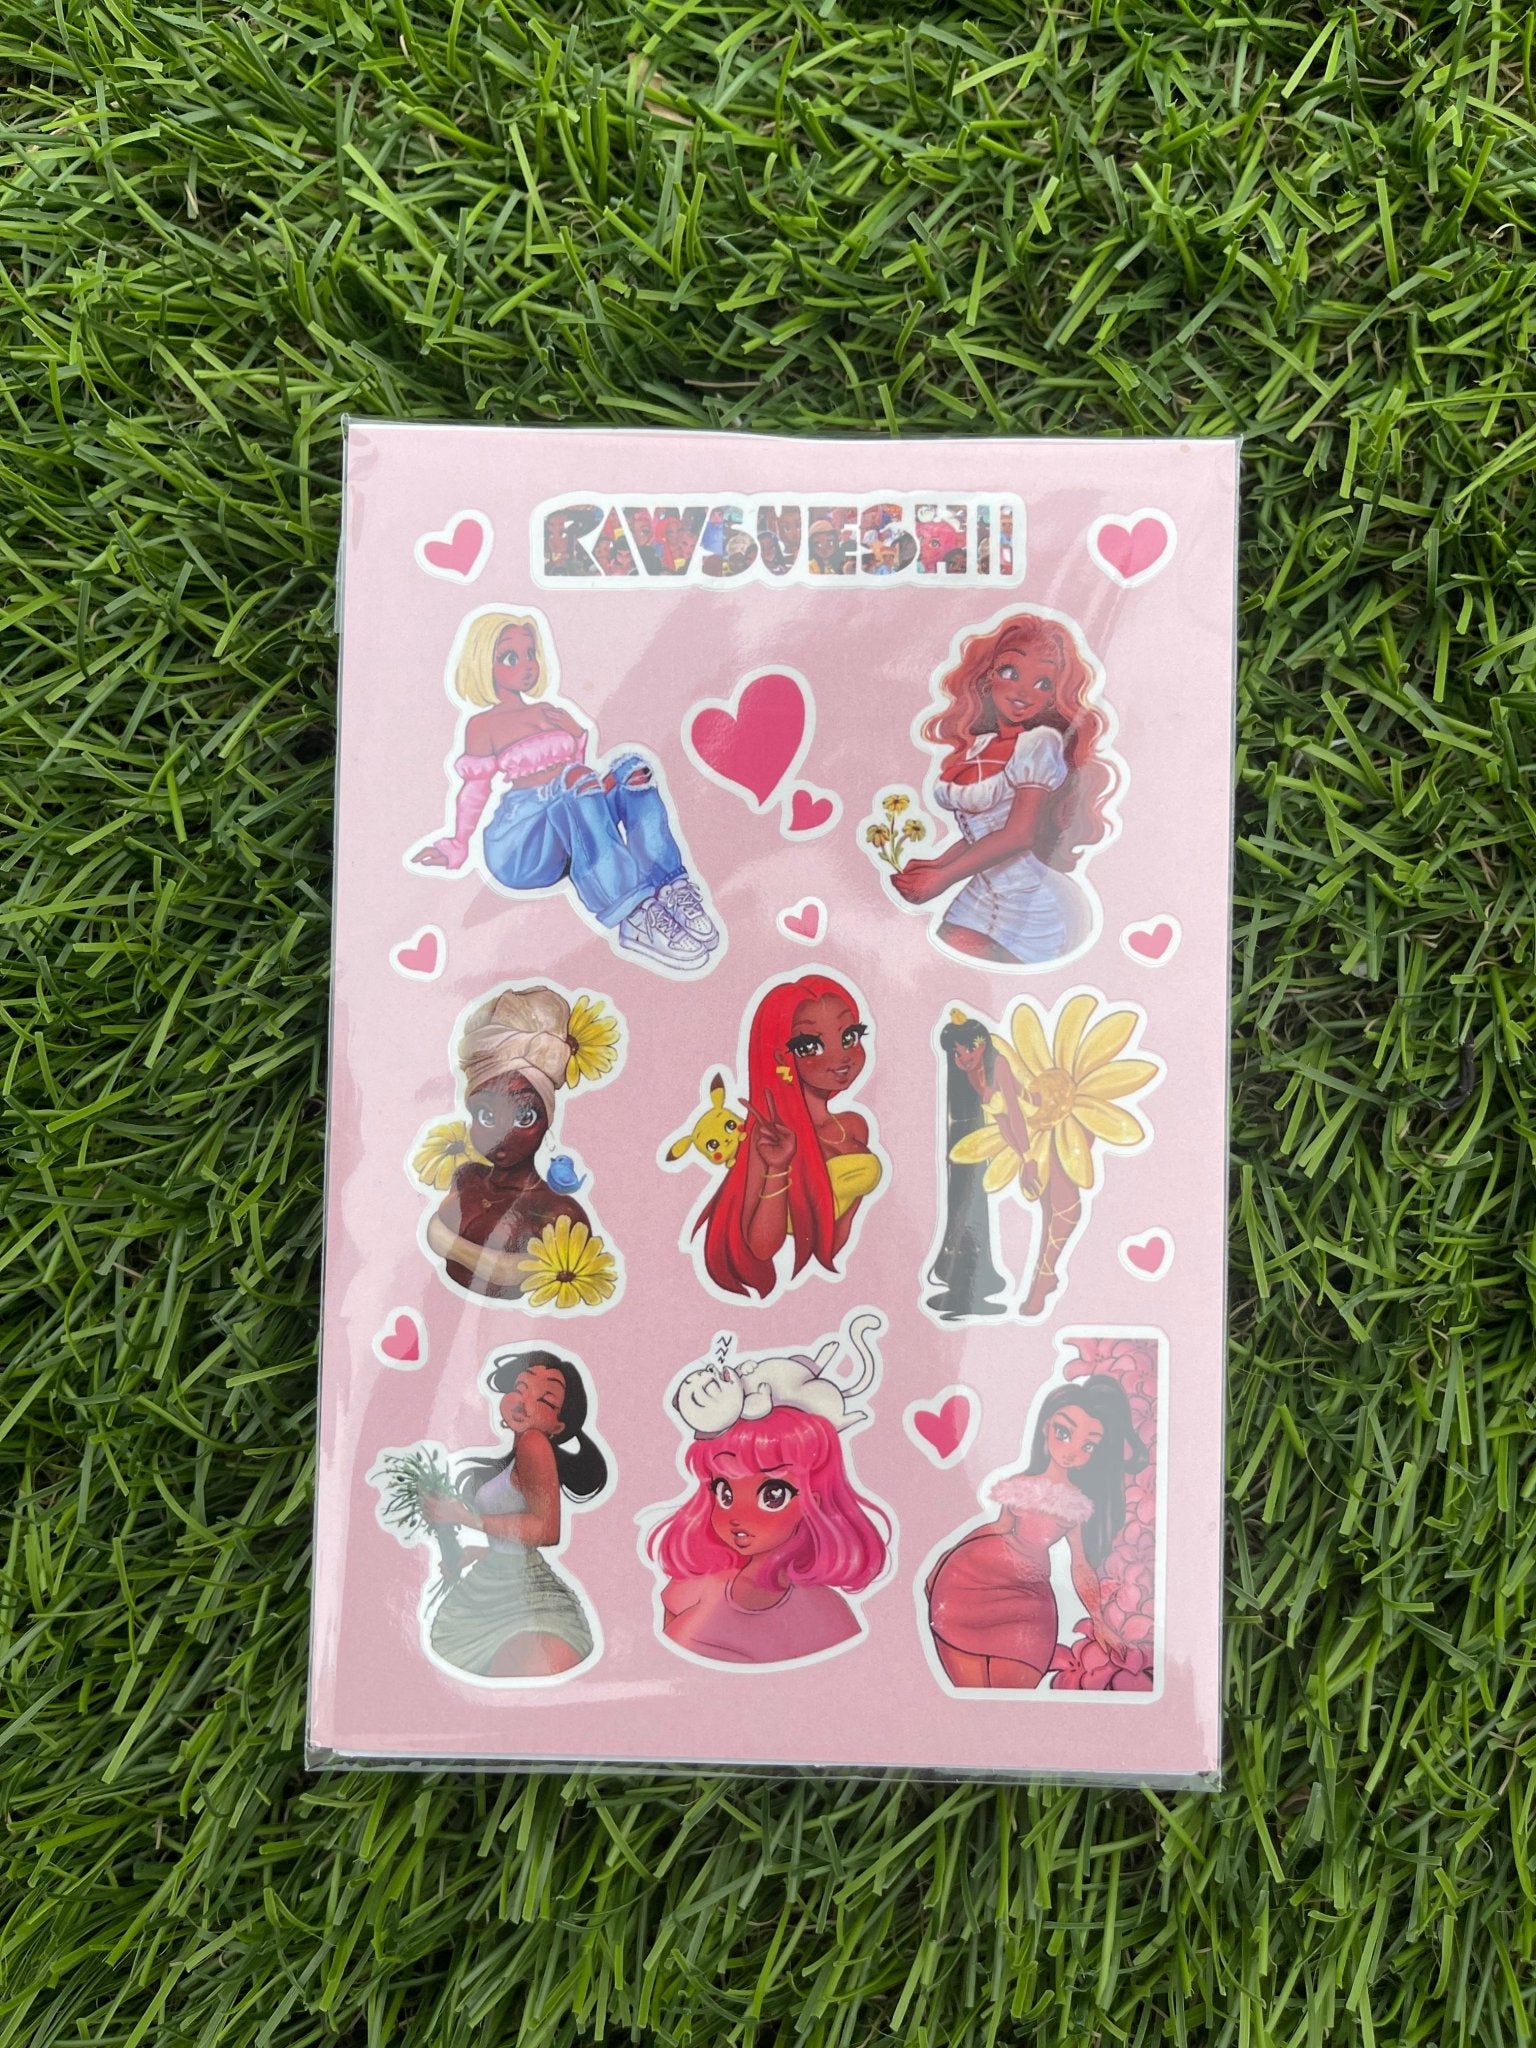 Strawberry Shortcake Sticker Sheet (Pink Background) - RawSueshii